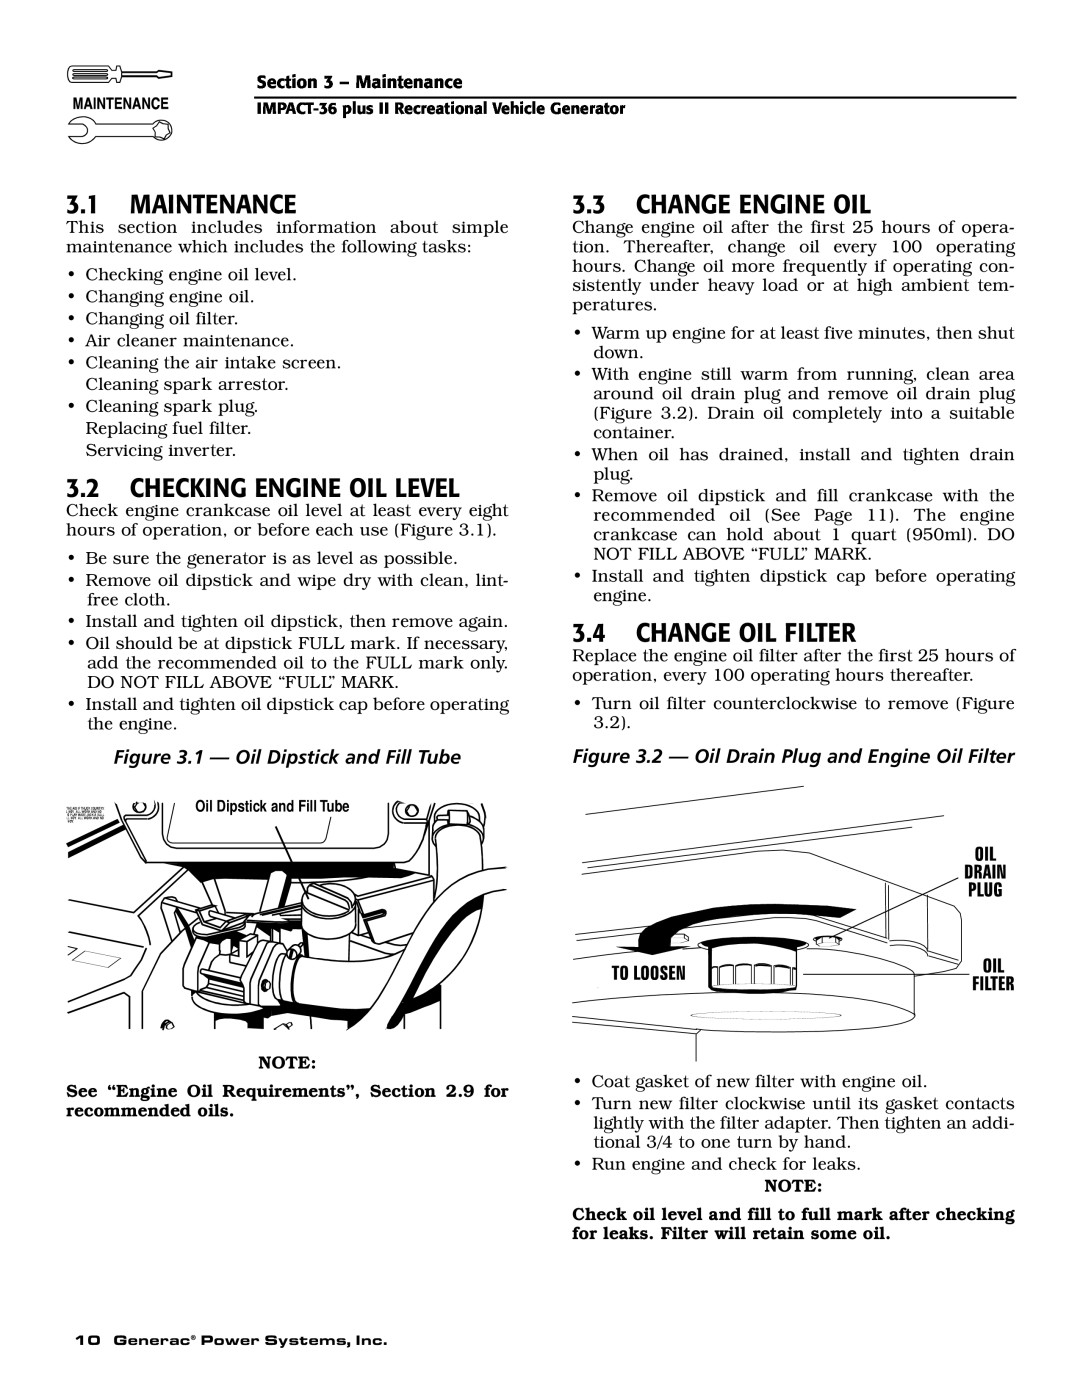 Generac 00941-3 owner manual 3.1MAINTENANCE, 3.2CHECKING ENGINE OIL LEVEL, 3.3CHANGE ENGINE OIL, 3.4CHANGE OIL FILTER 